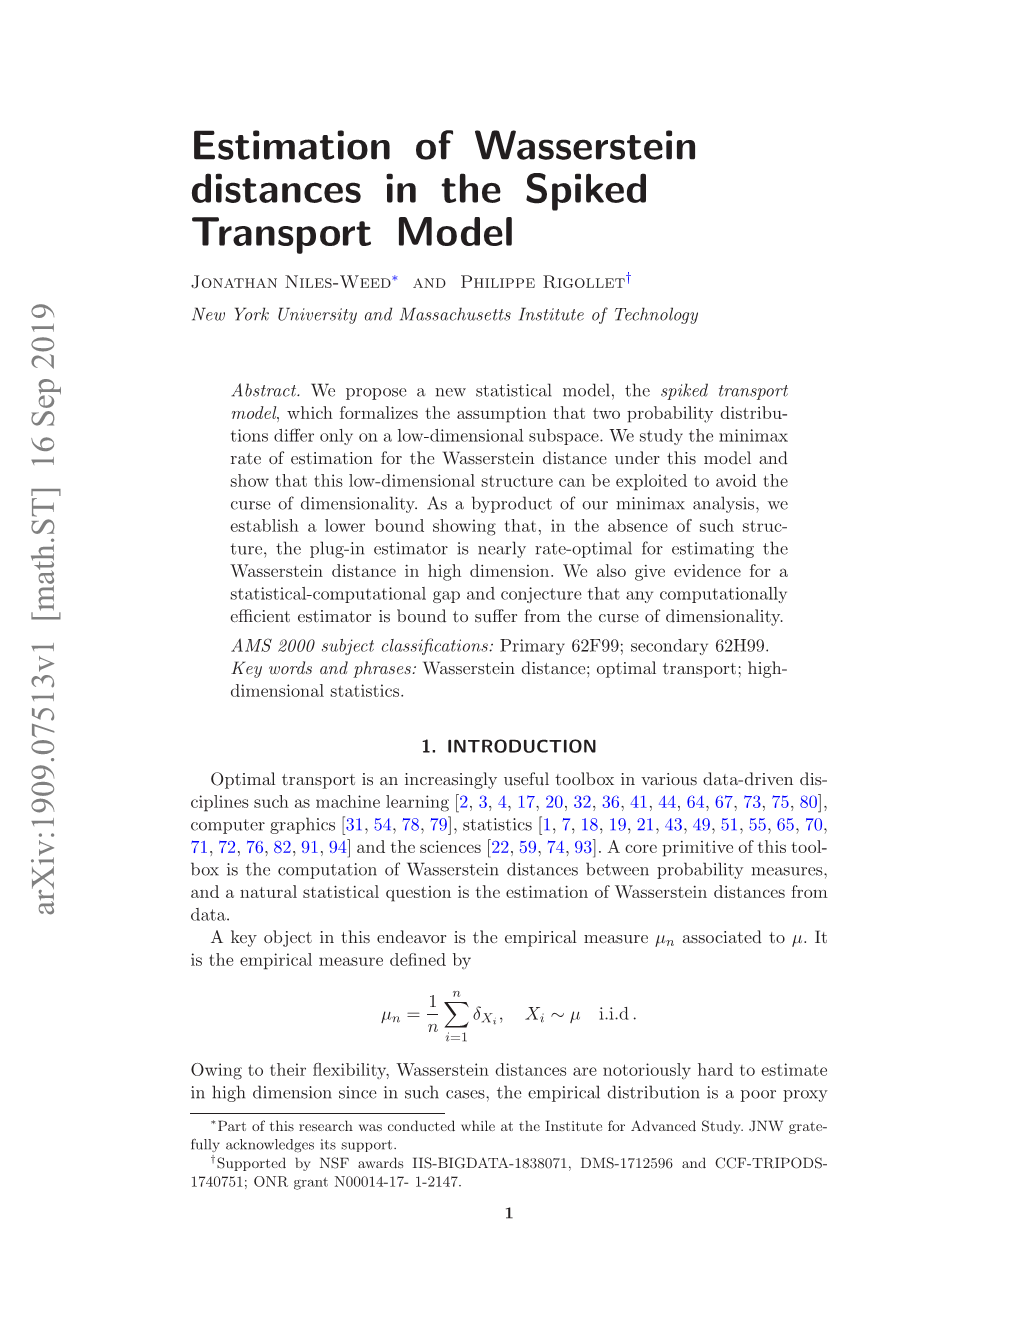 Estimation of Wasserstein Distances in the Spiked Transport Model